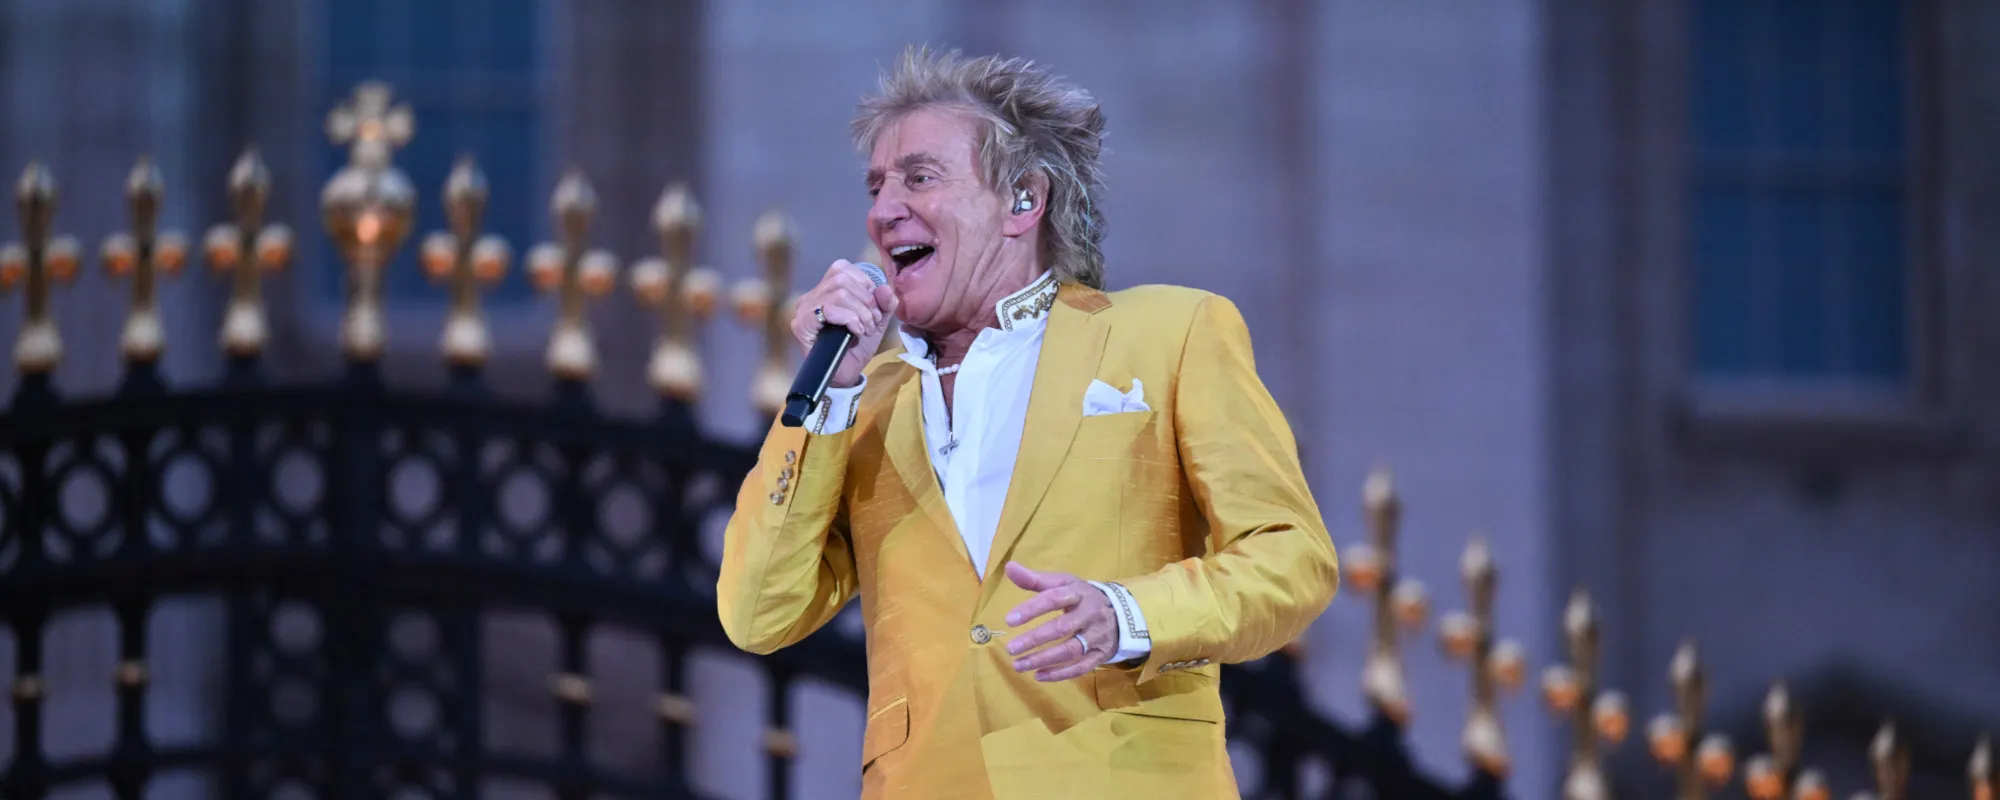 Rod Stewart Pokes Fun At Elton John During a Concert—“Still Love You, Elt”